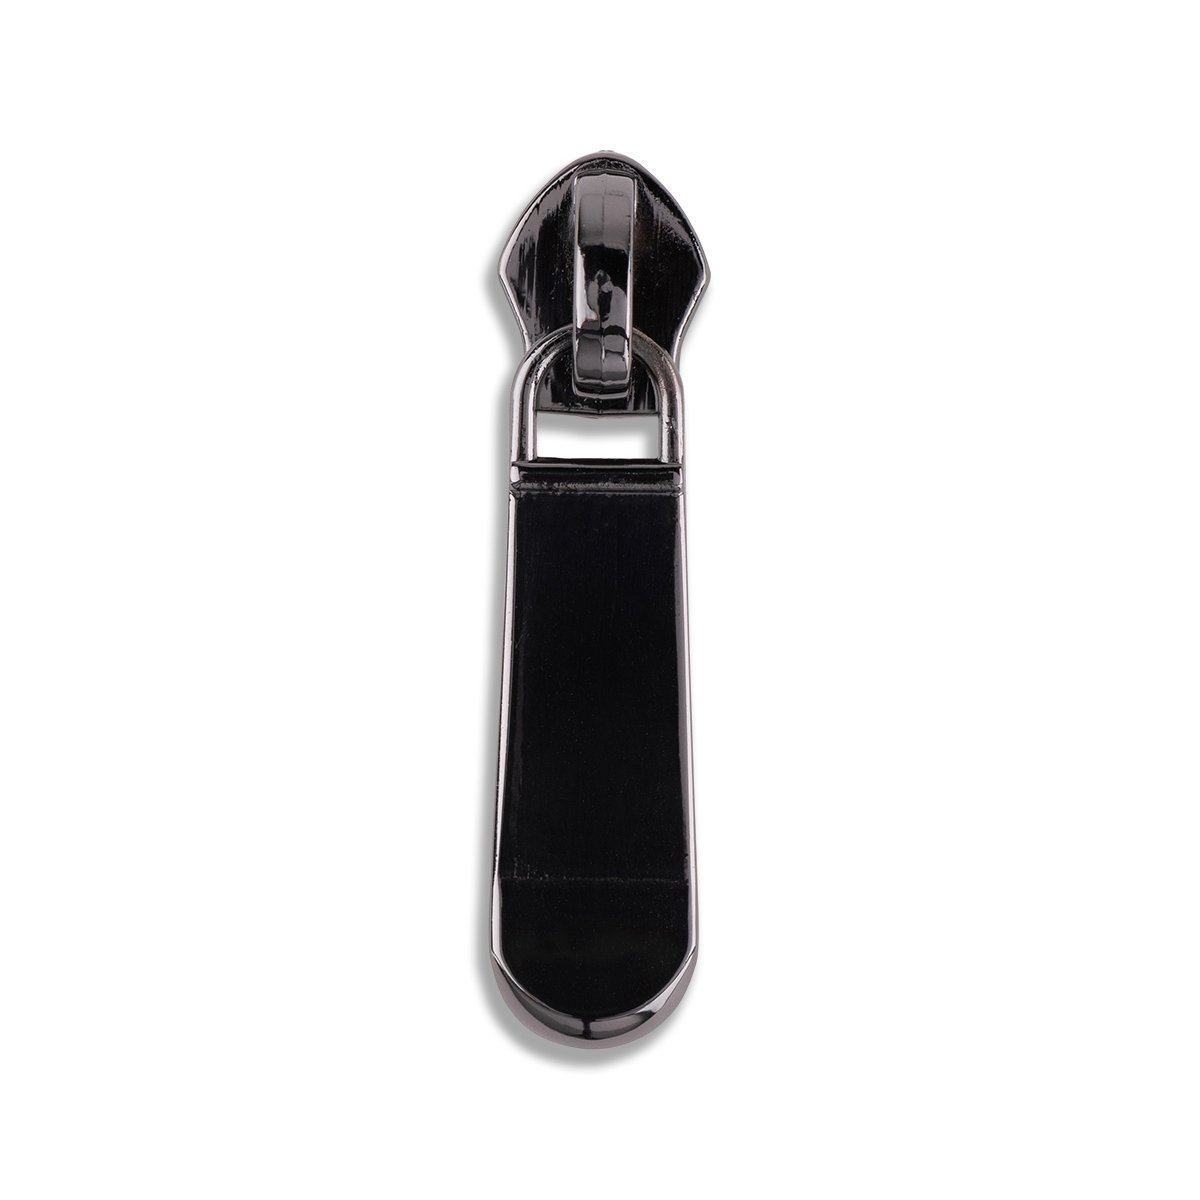 YKK #8 Two-Way Zipper Slider Replacement - Molded Plastic - WAWAK Sewing  Supplies